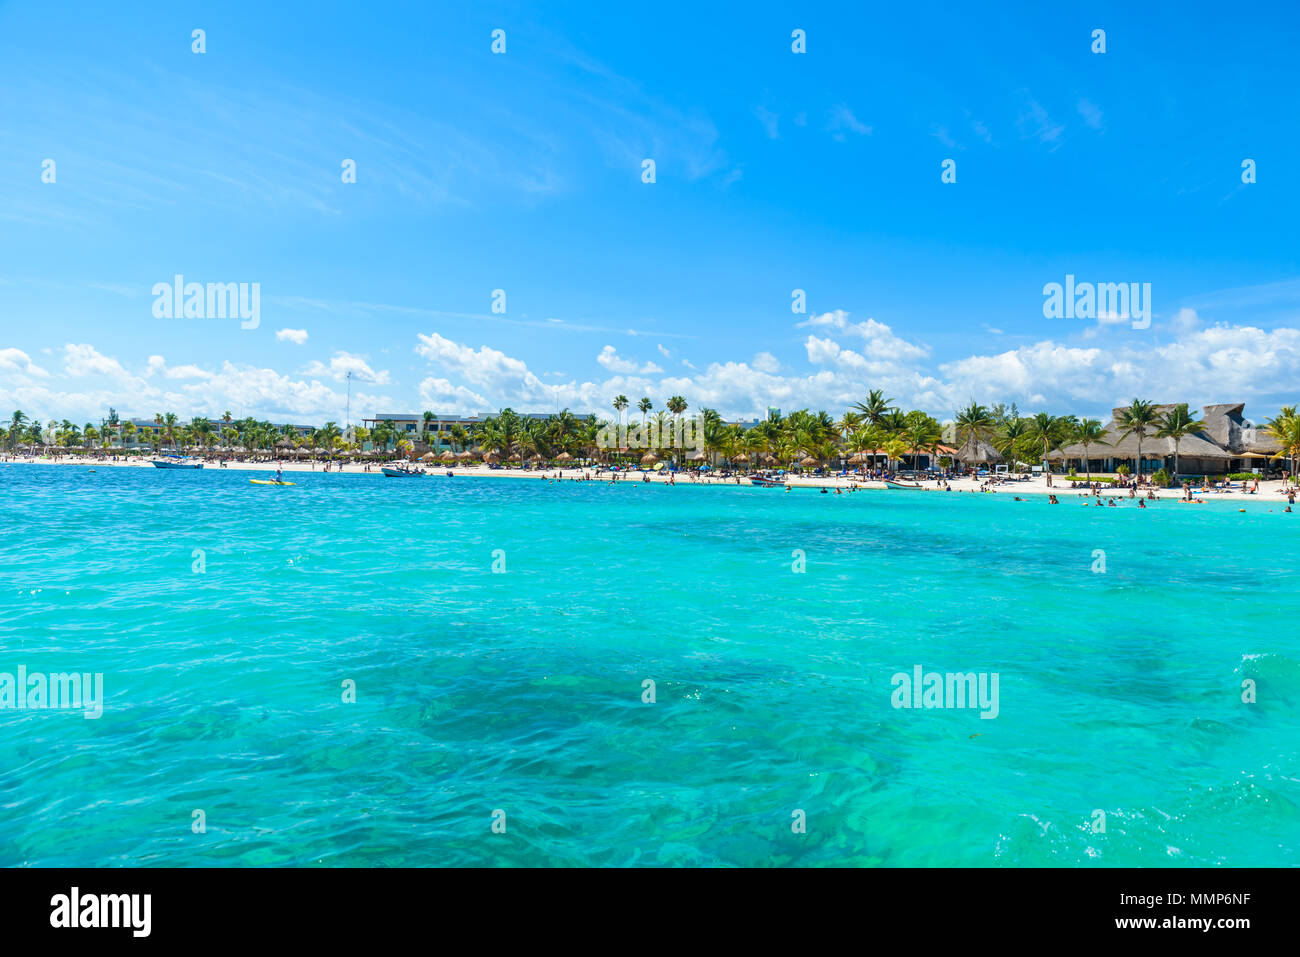 La playa de Akumal - paradise bay Beach en Quintana Roo, México - Costa Caribe Foto de stock